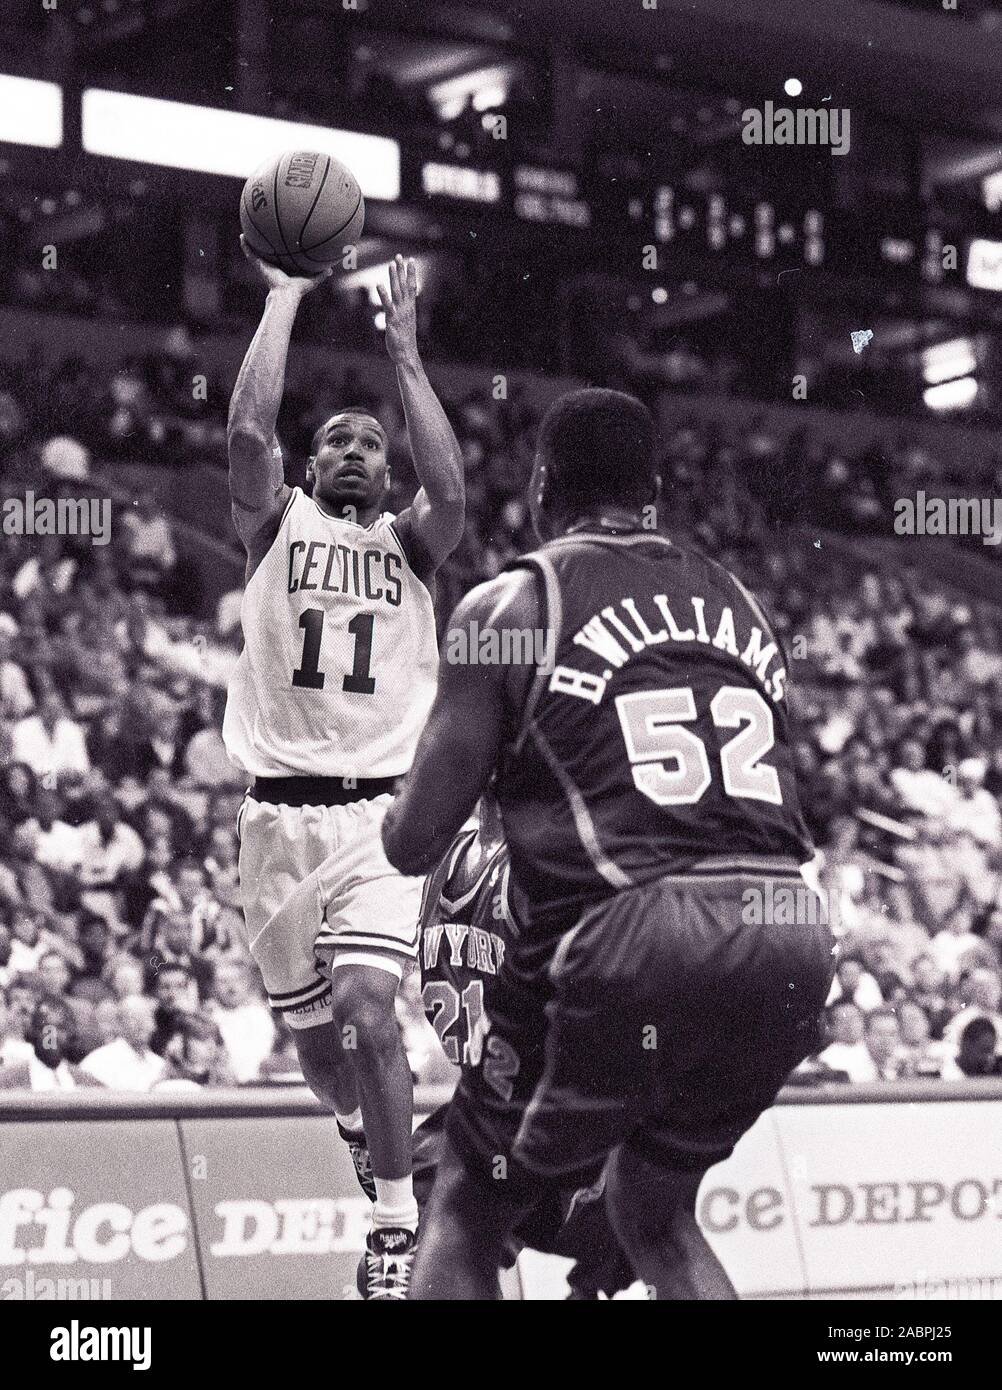 Boston Celtics Dana Barros schießt den Ball gegen NY Knicks B. Williams im Basketball spiel action im Fleet Center in Boston, Ma USA 1997 Foto von Bill belknap Stockfoto